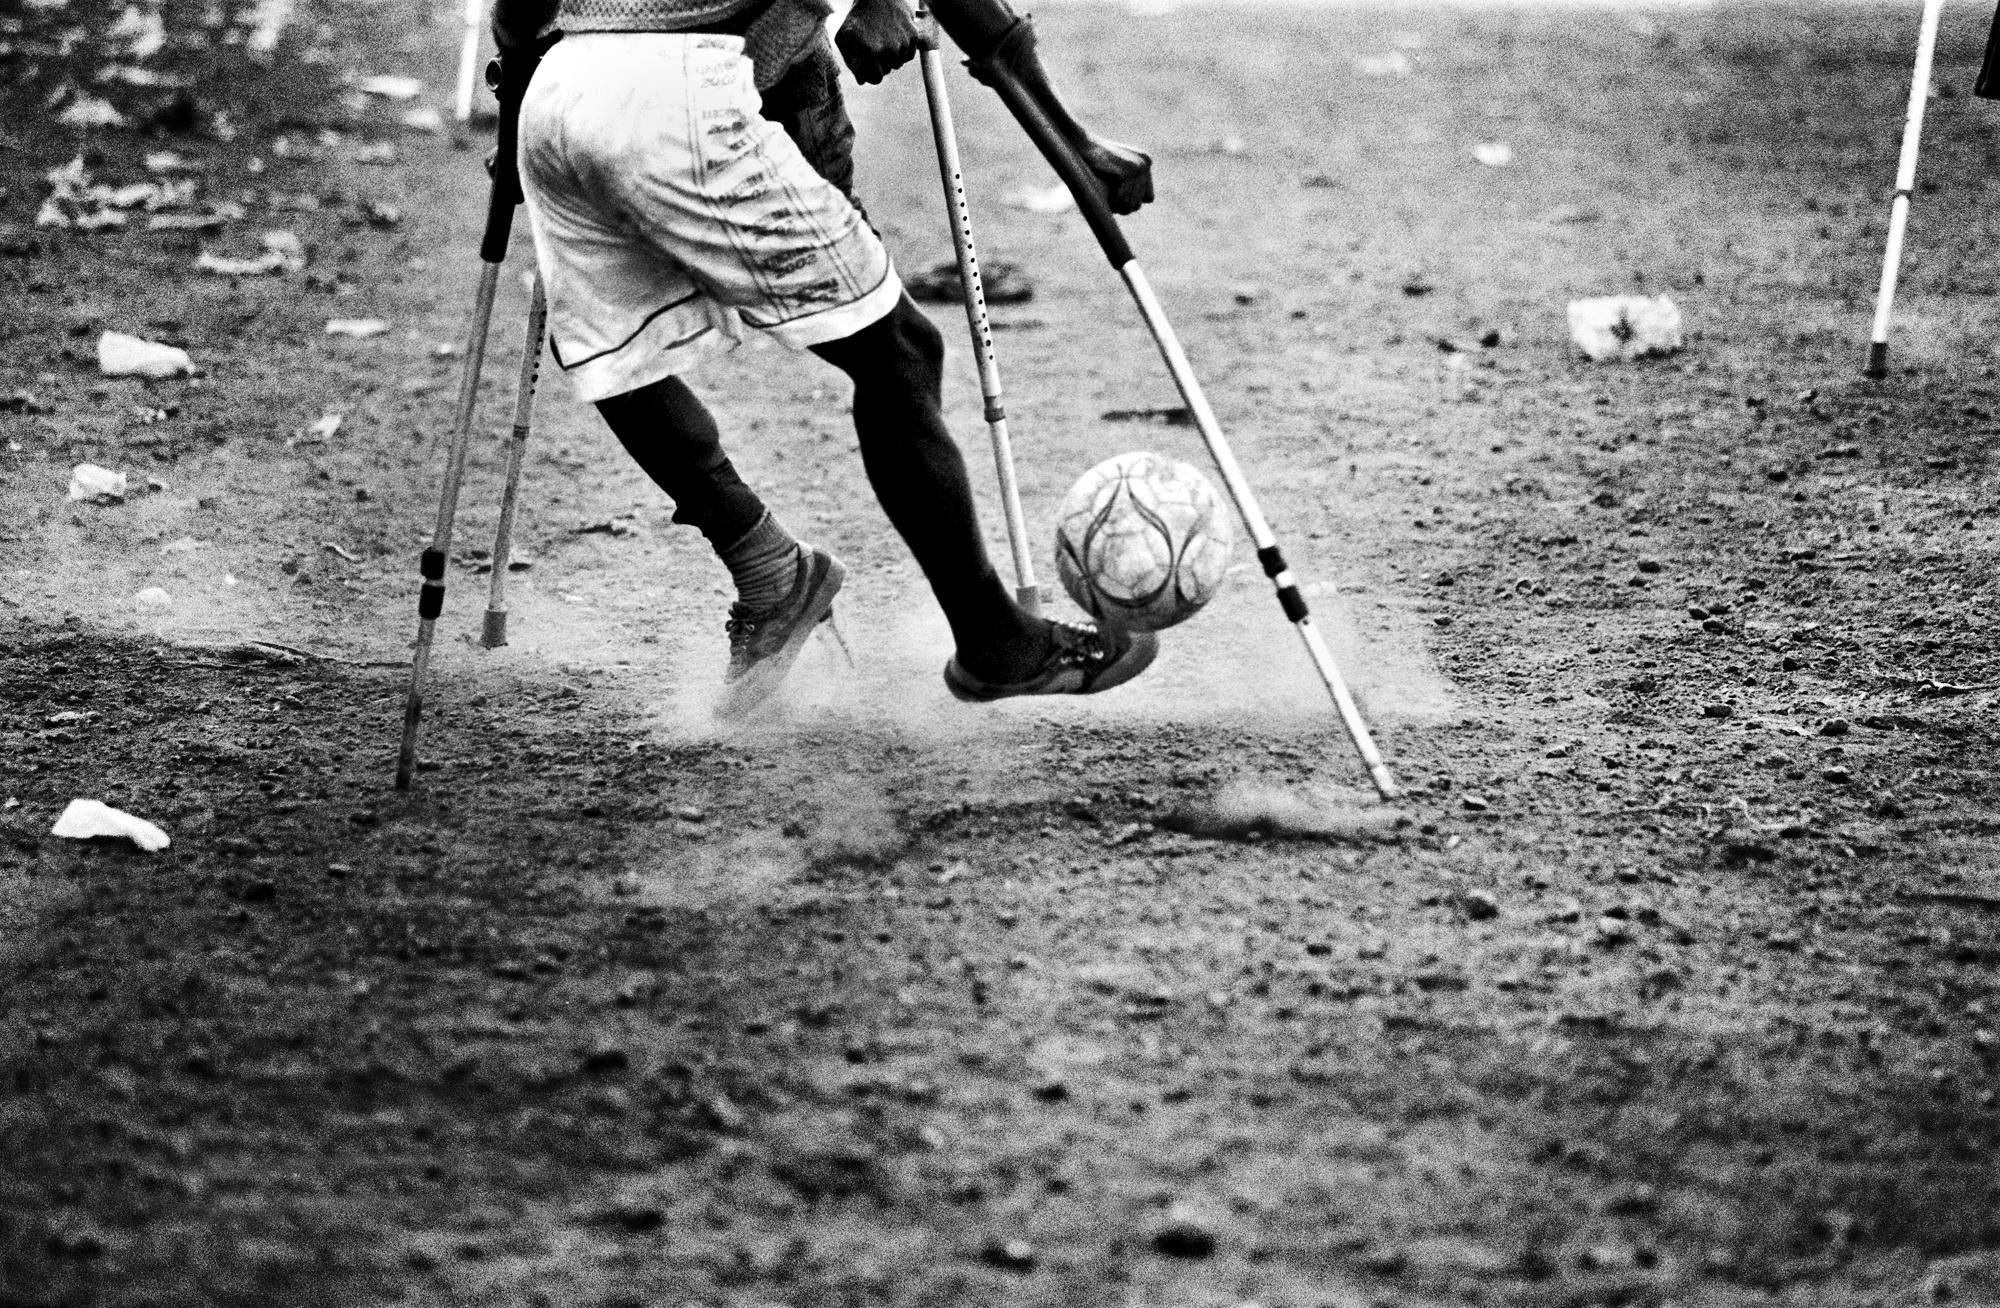 One Goal - Sierra Leone, Freetown, April 2003.
War amputees soccer...